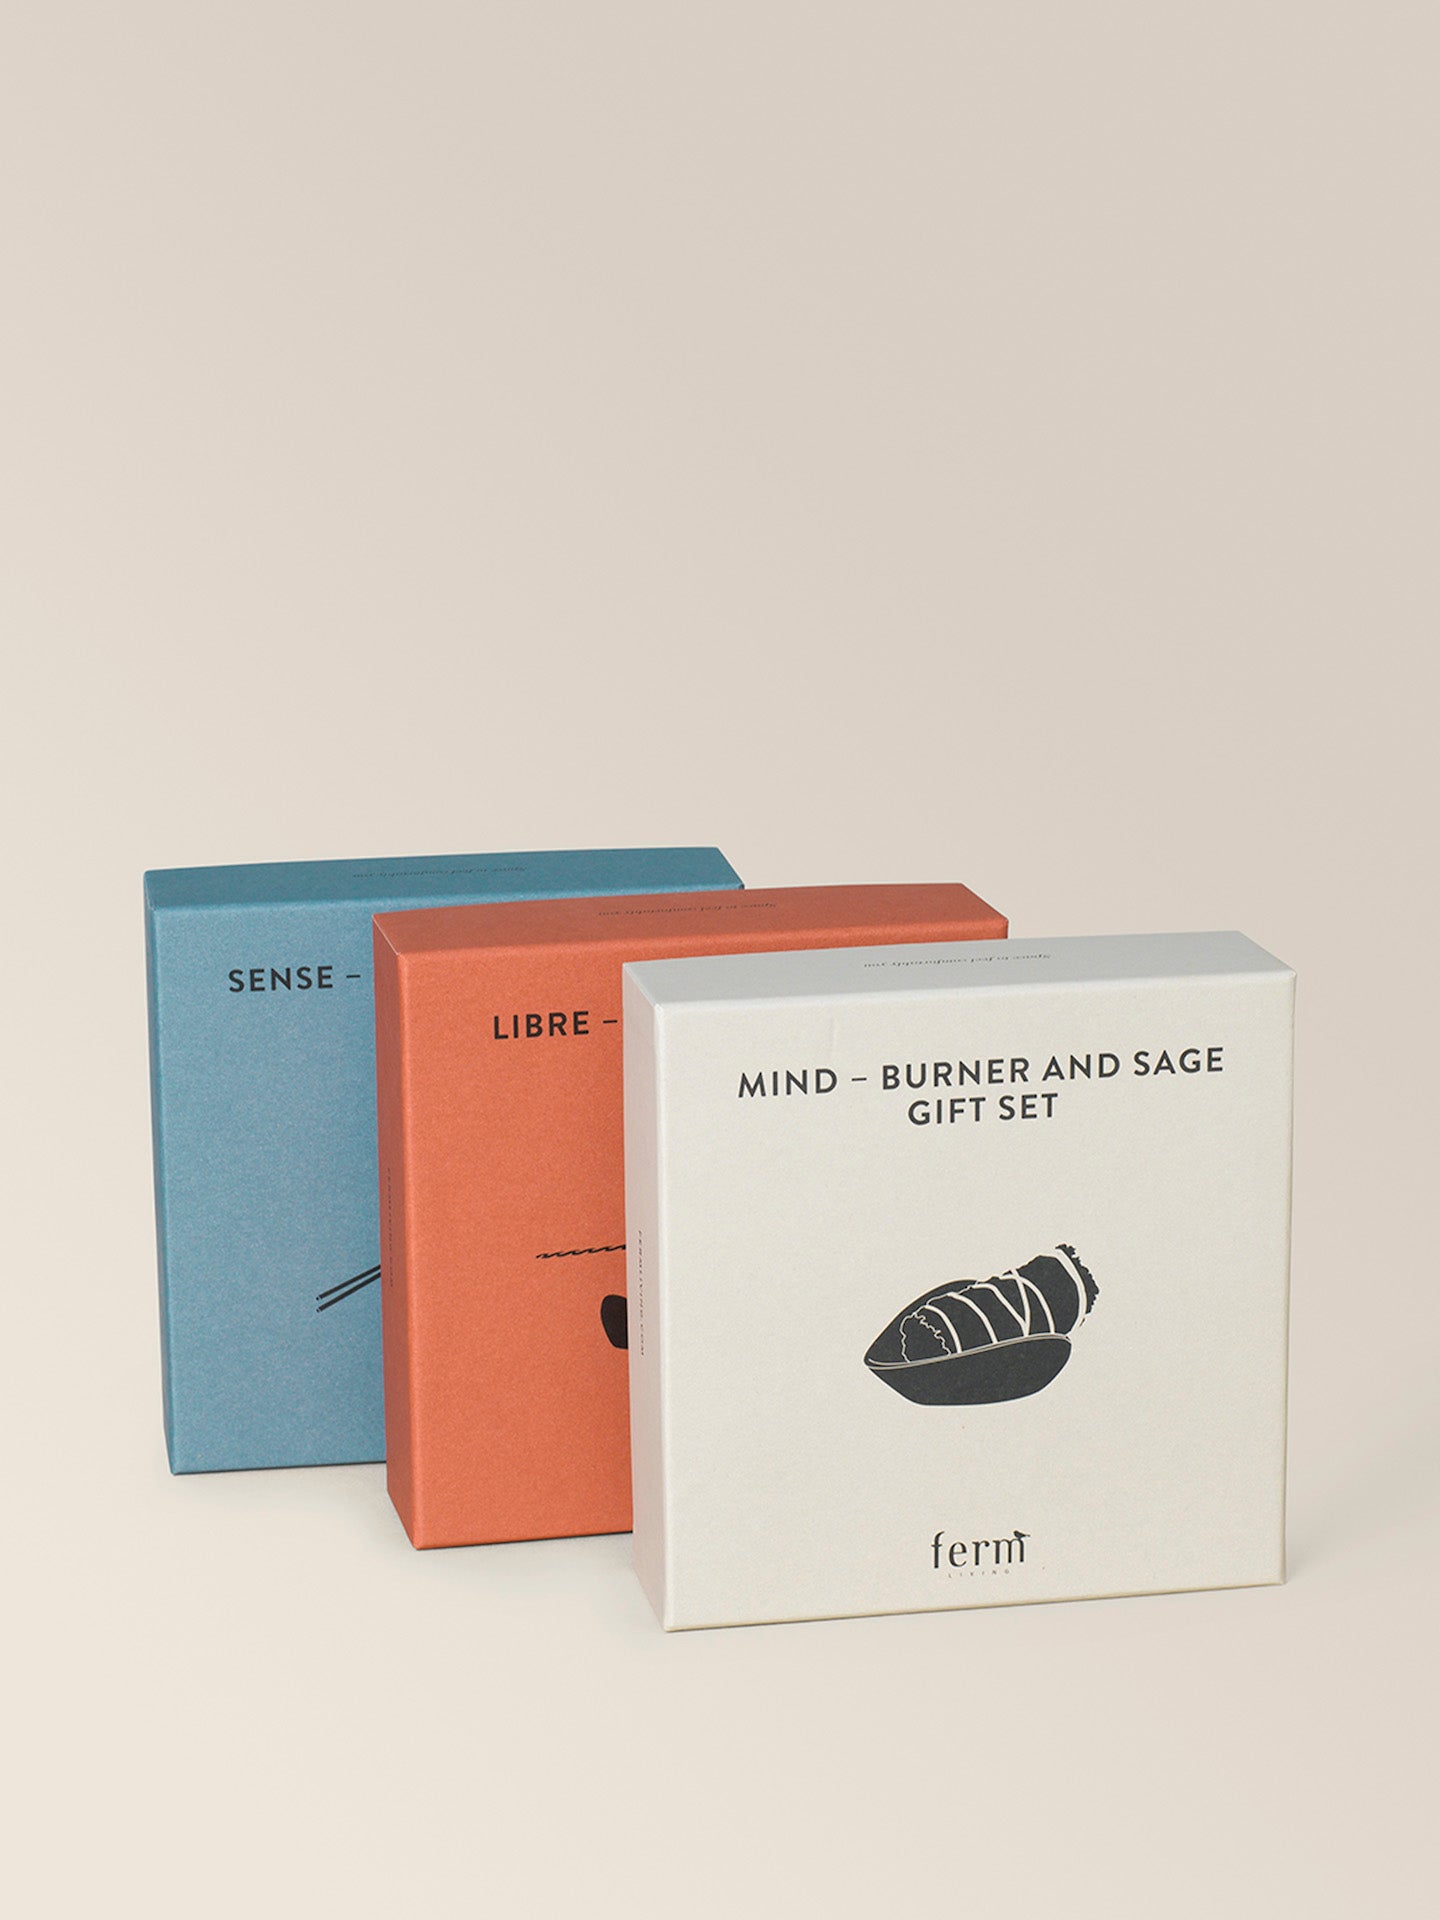 Sense - Incense Holder Gift Set | Ceramic & Sticks | by ferm Living - Lifestory - ferm LIVING